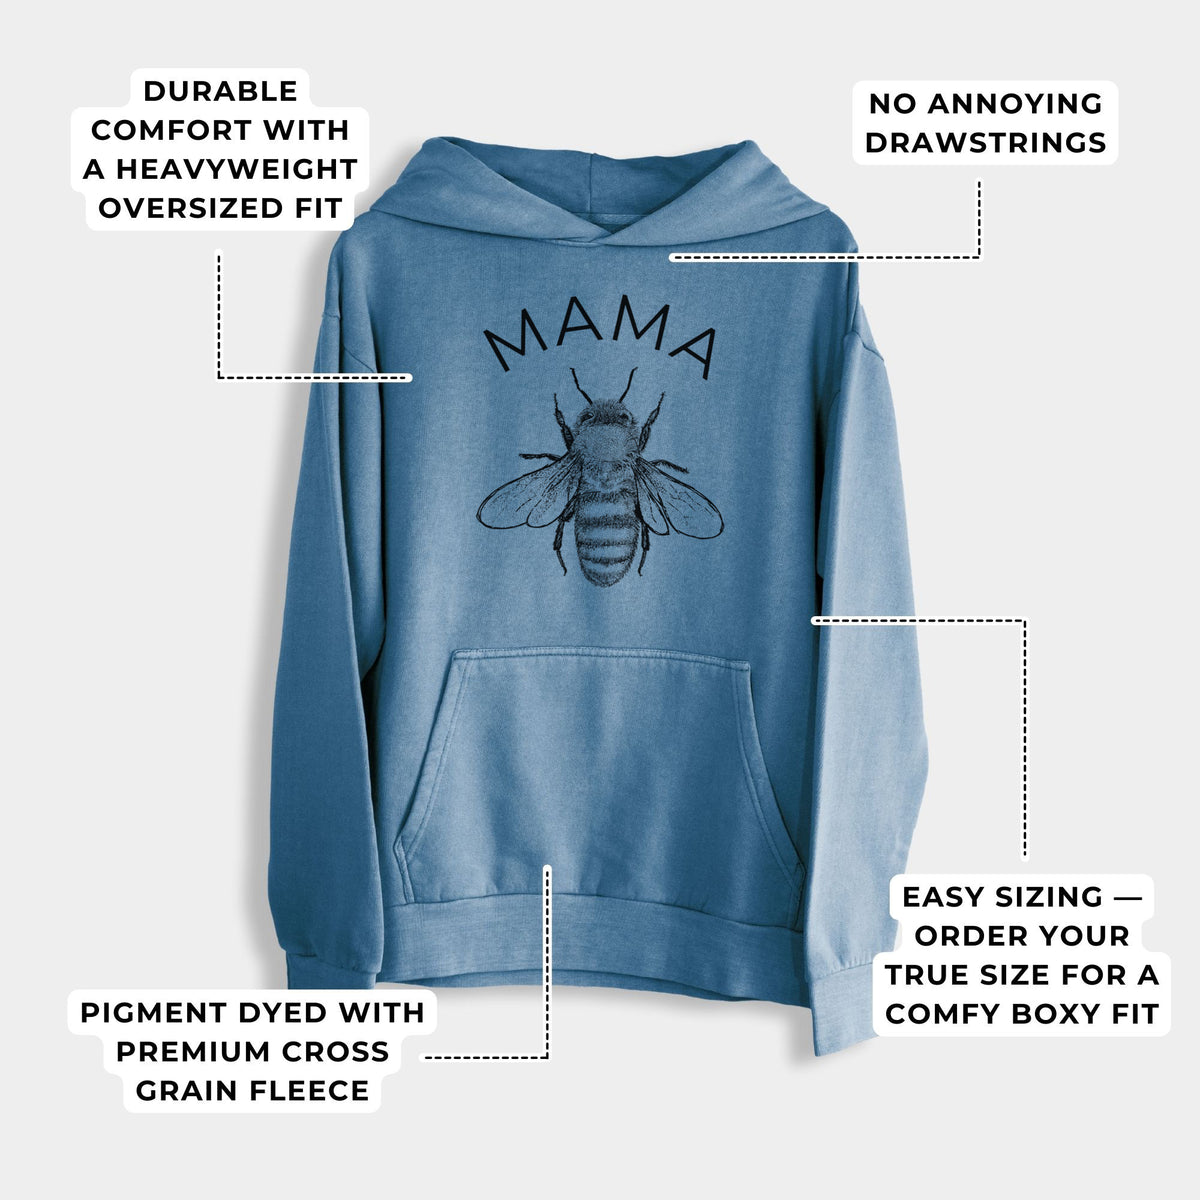 Mama Bee  - Urban Heavyweight Hoodie